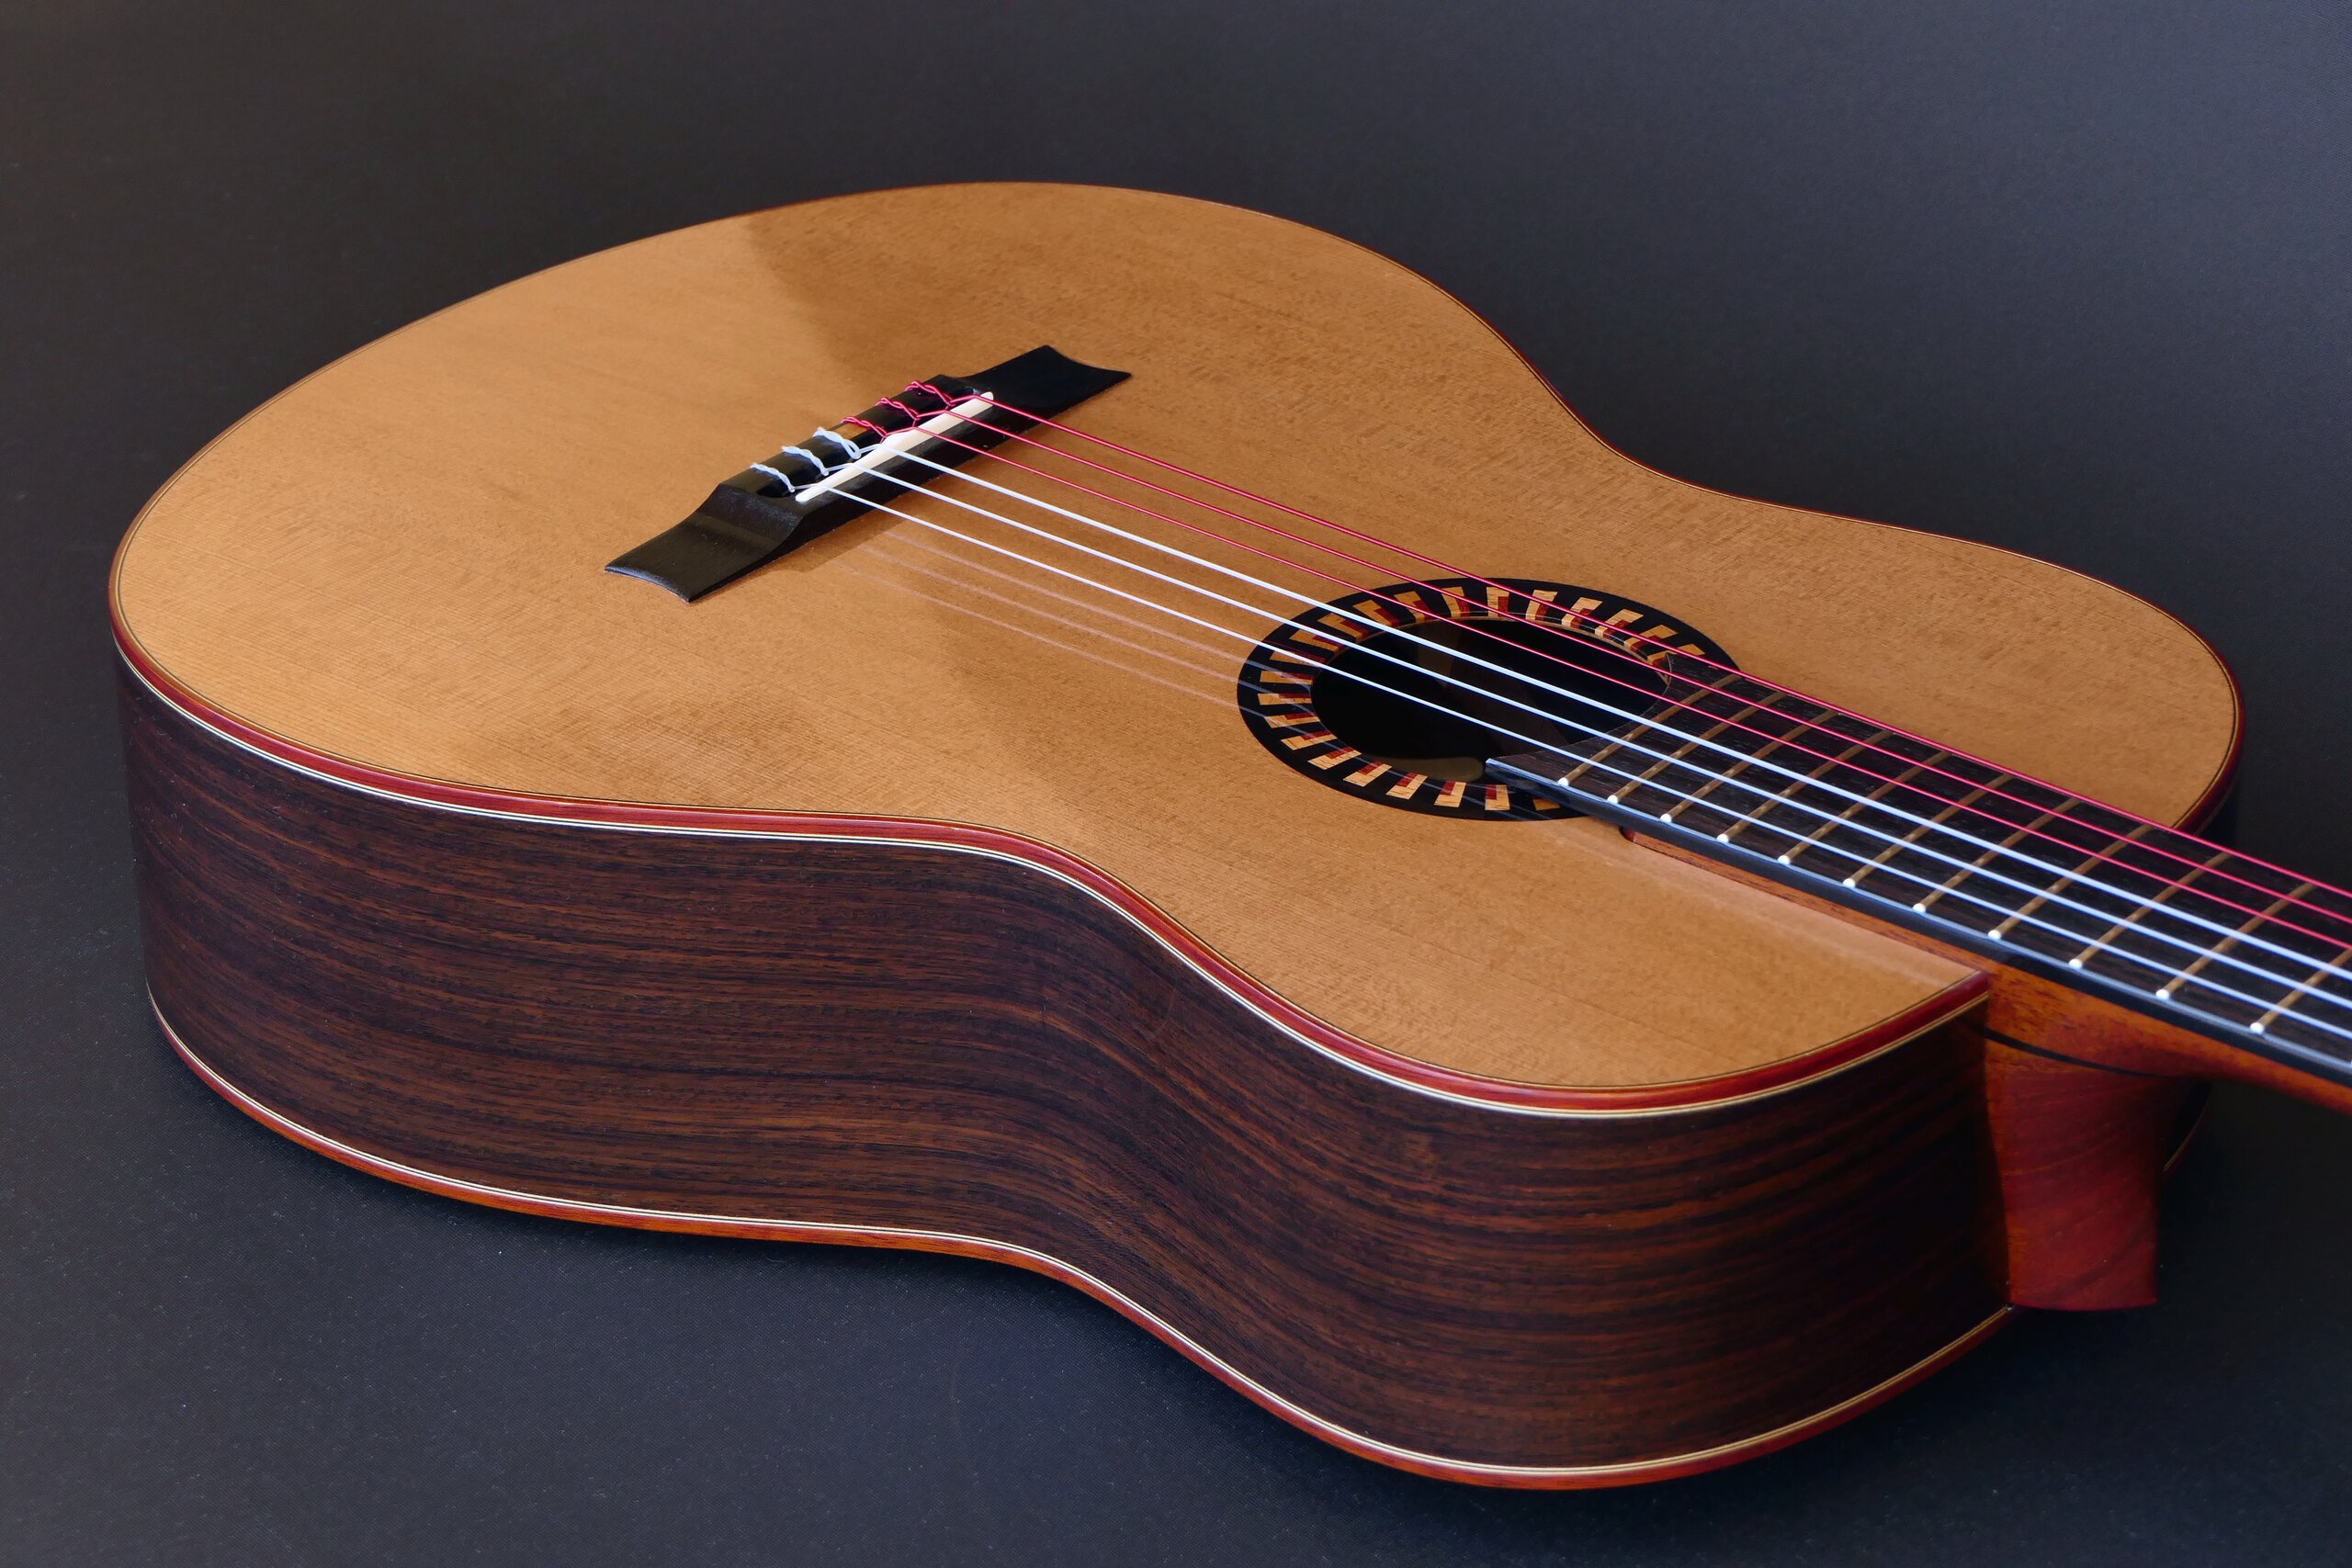 Custom guitars. Classical guitar with cedar top, rosewood sides, bloodwood binding